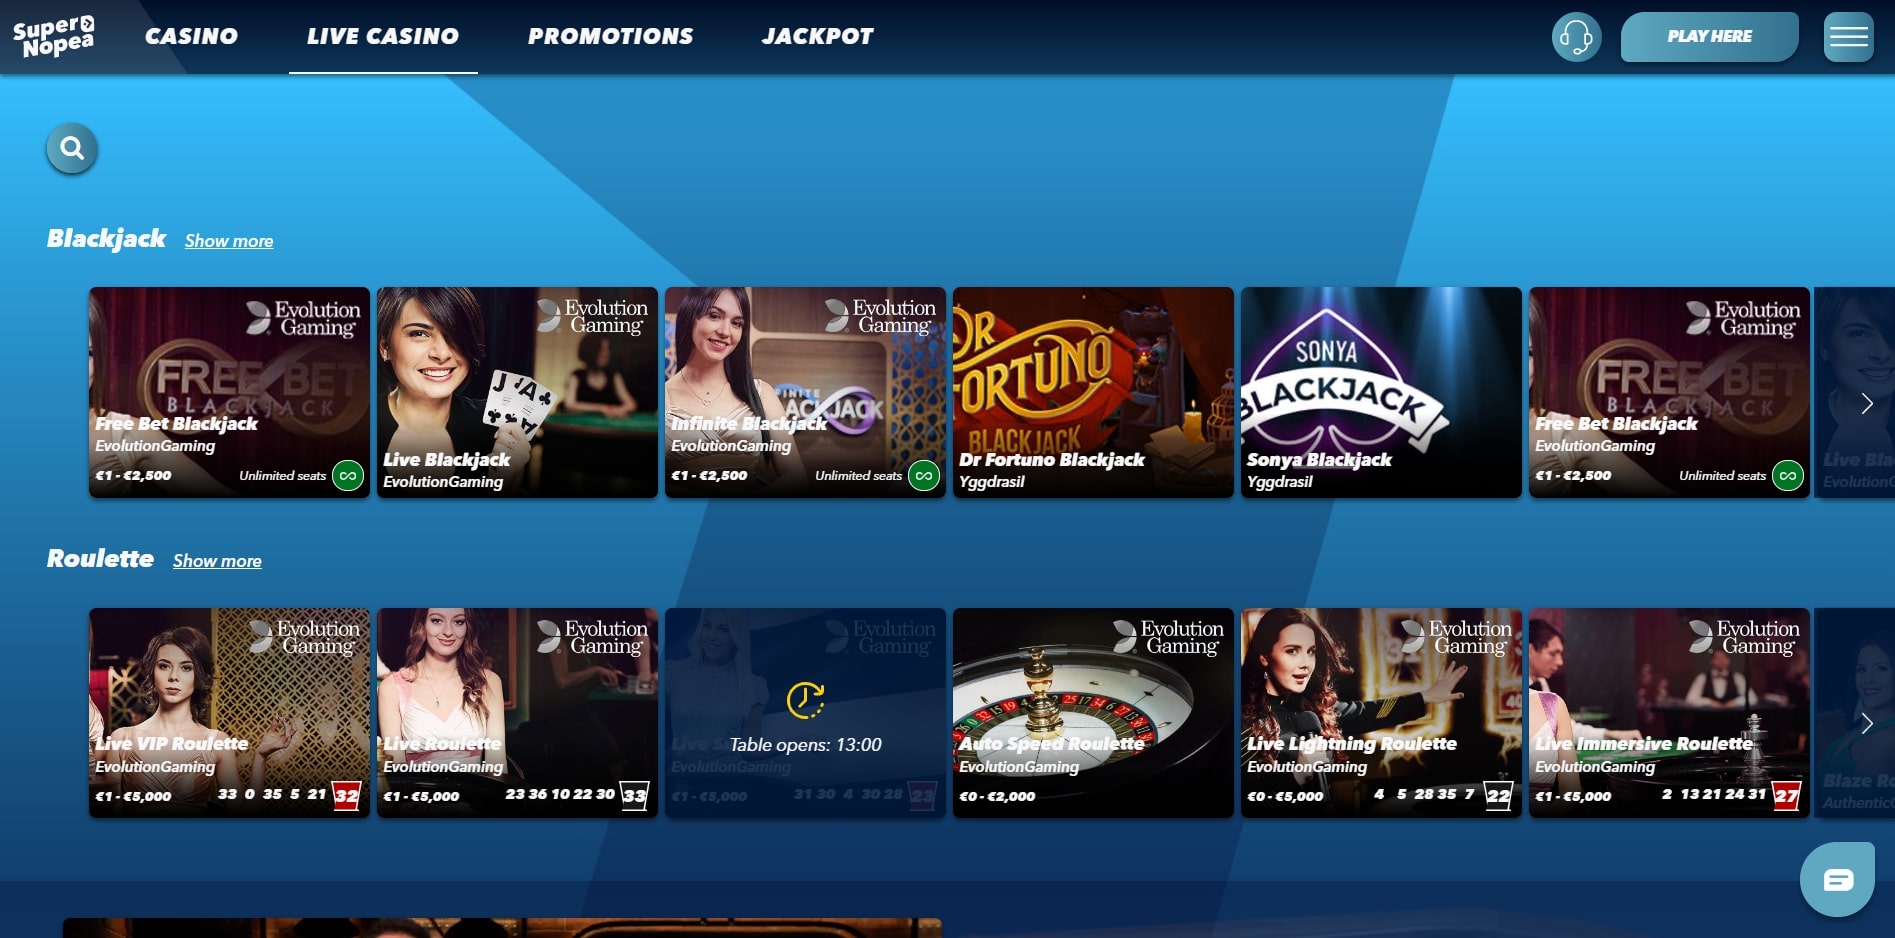 SuperNopea Casino Live Dealer Games